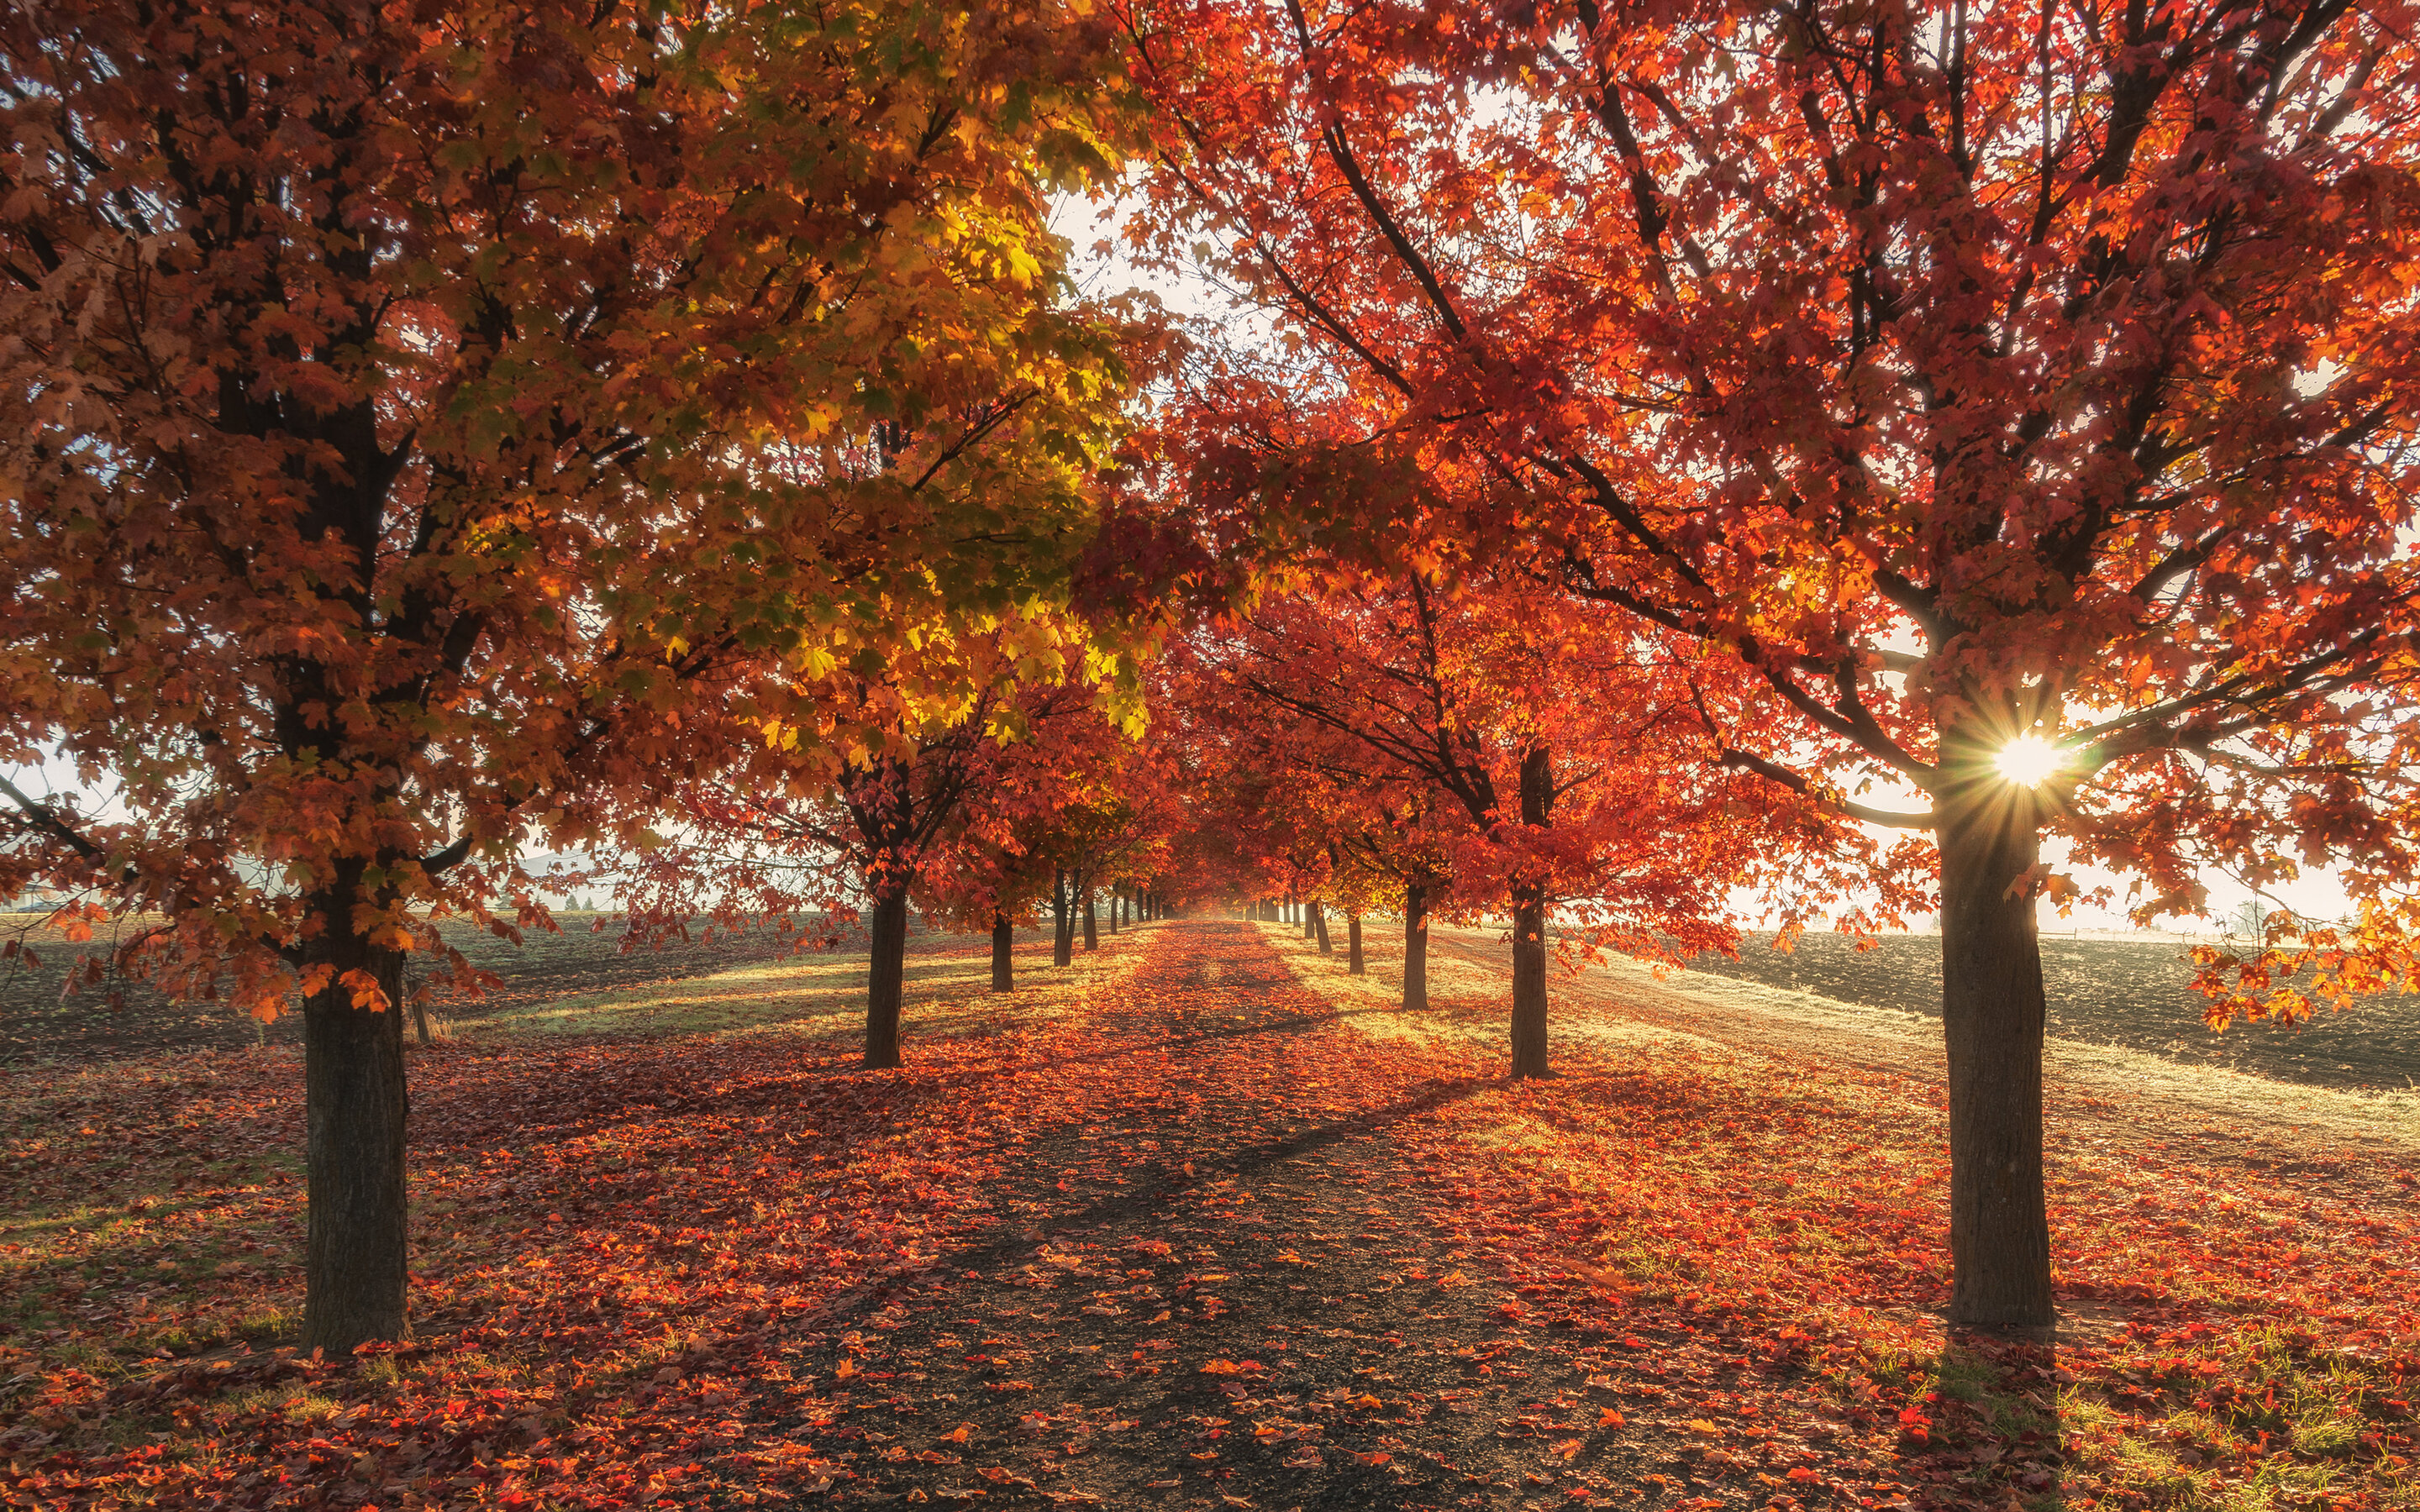 Autumn Fall Season Trees 4k Macbook Pro Retina HD 4k Wallpaper, Image, Background, Photo and Picture